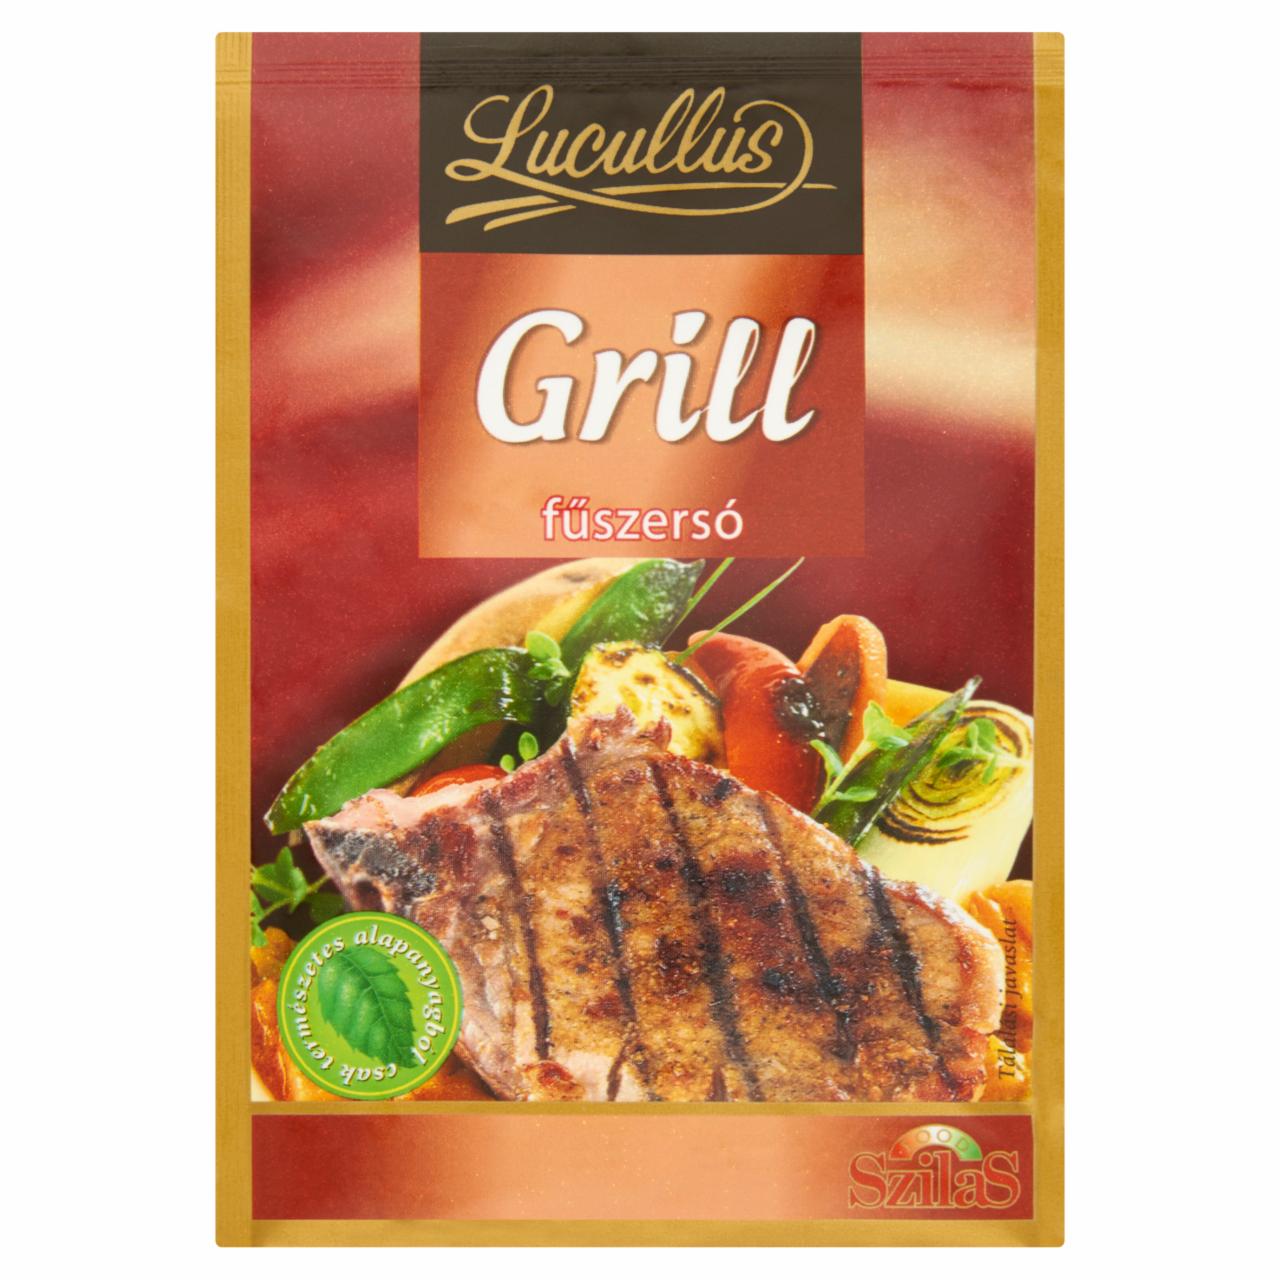 Képek - Lucullus grill fűszersó 40 g